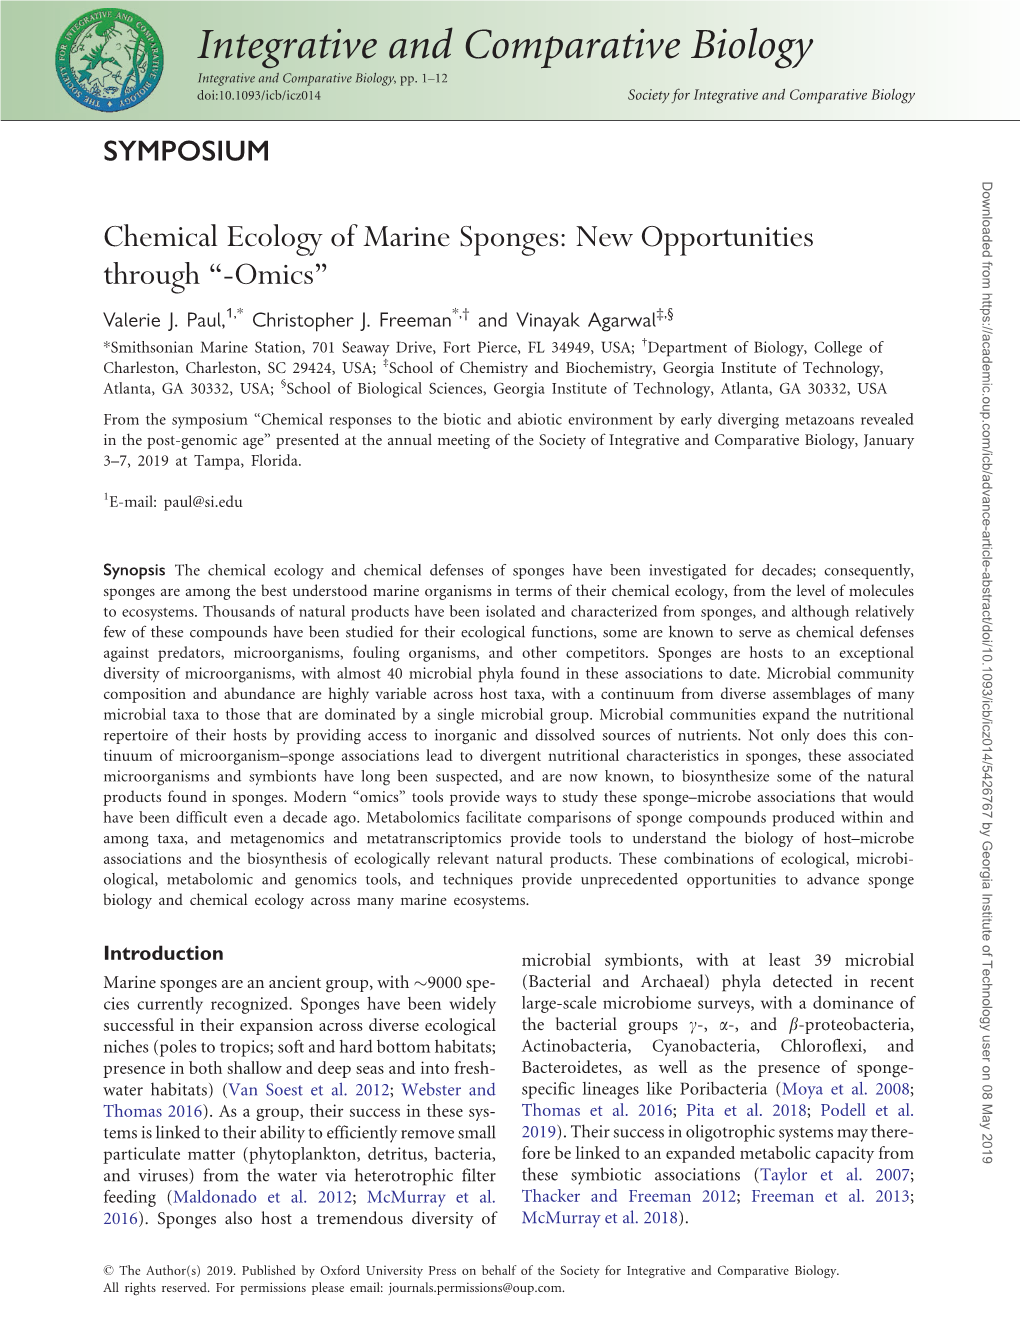 Chemical Ecology of Marine Sponges: New Opportunities Through “-Omics” Valerie J